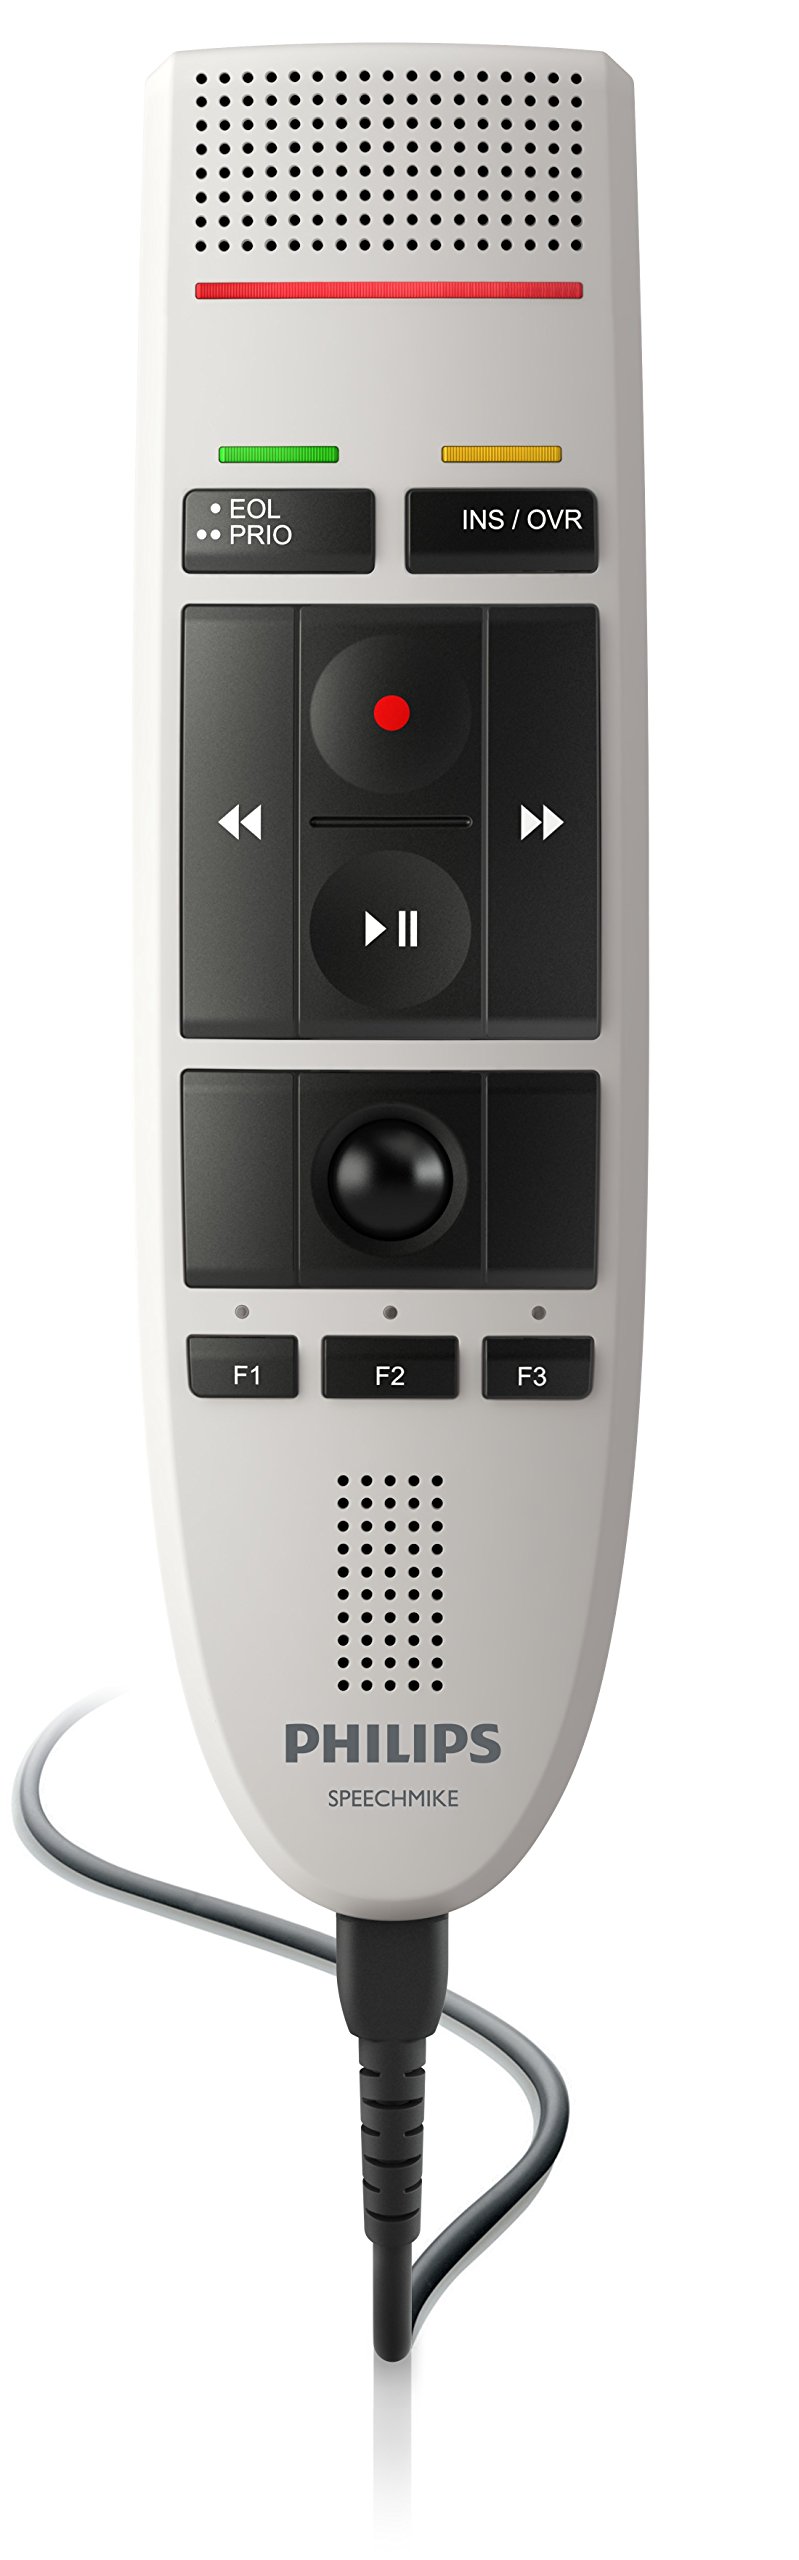 Philips LFH3200 स्पीचमाइक III प्रो (पुश बटन ऑपरेशन) यूए...